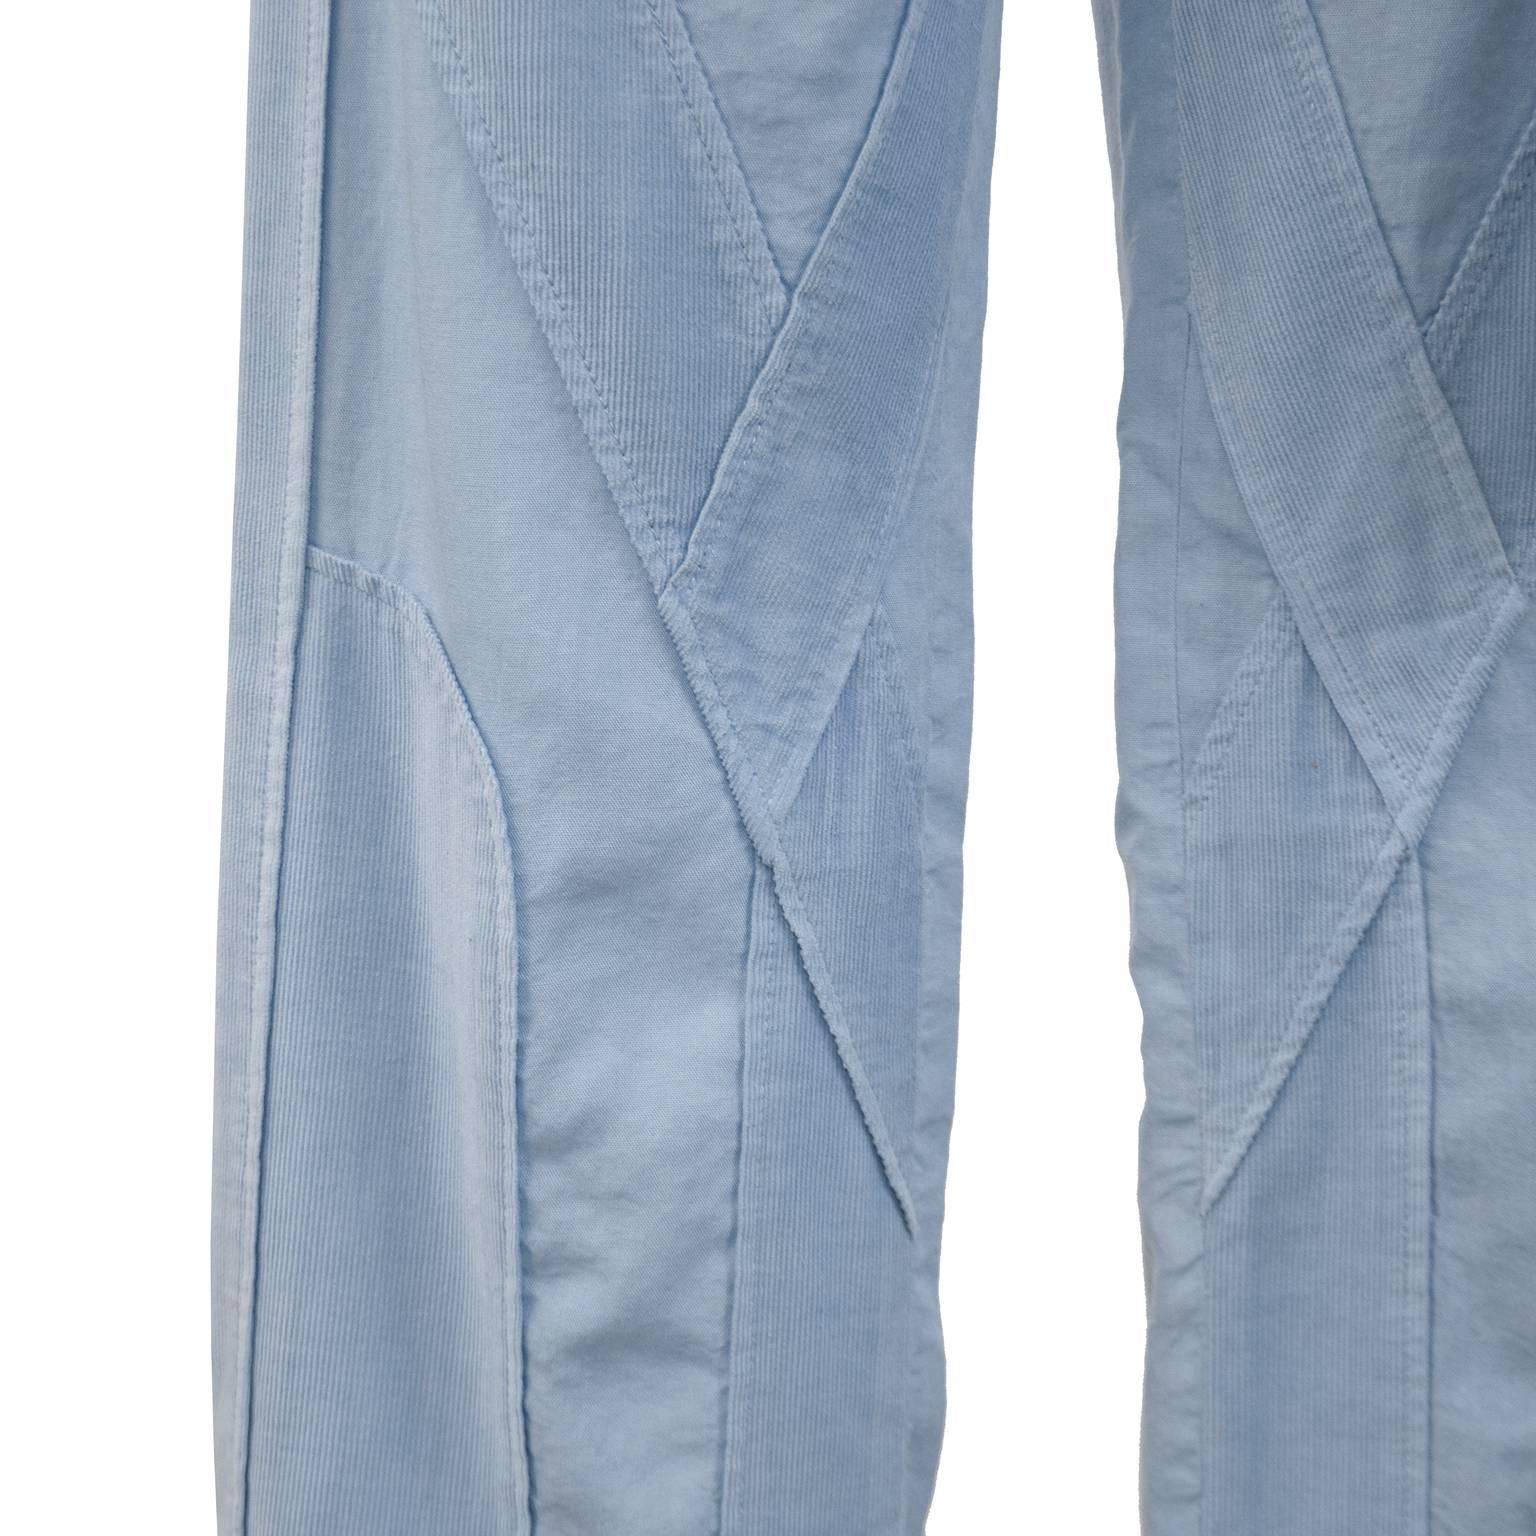 Balenciaga by Nicolas Ghesquière Blue Cotton and Corduroy Cargo Pants, S/S 2002  In Excellent Condition In Toronto, Ontario